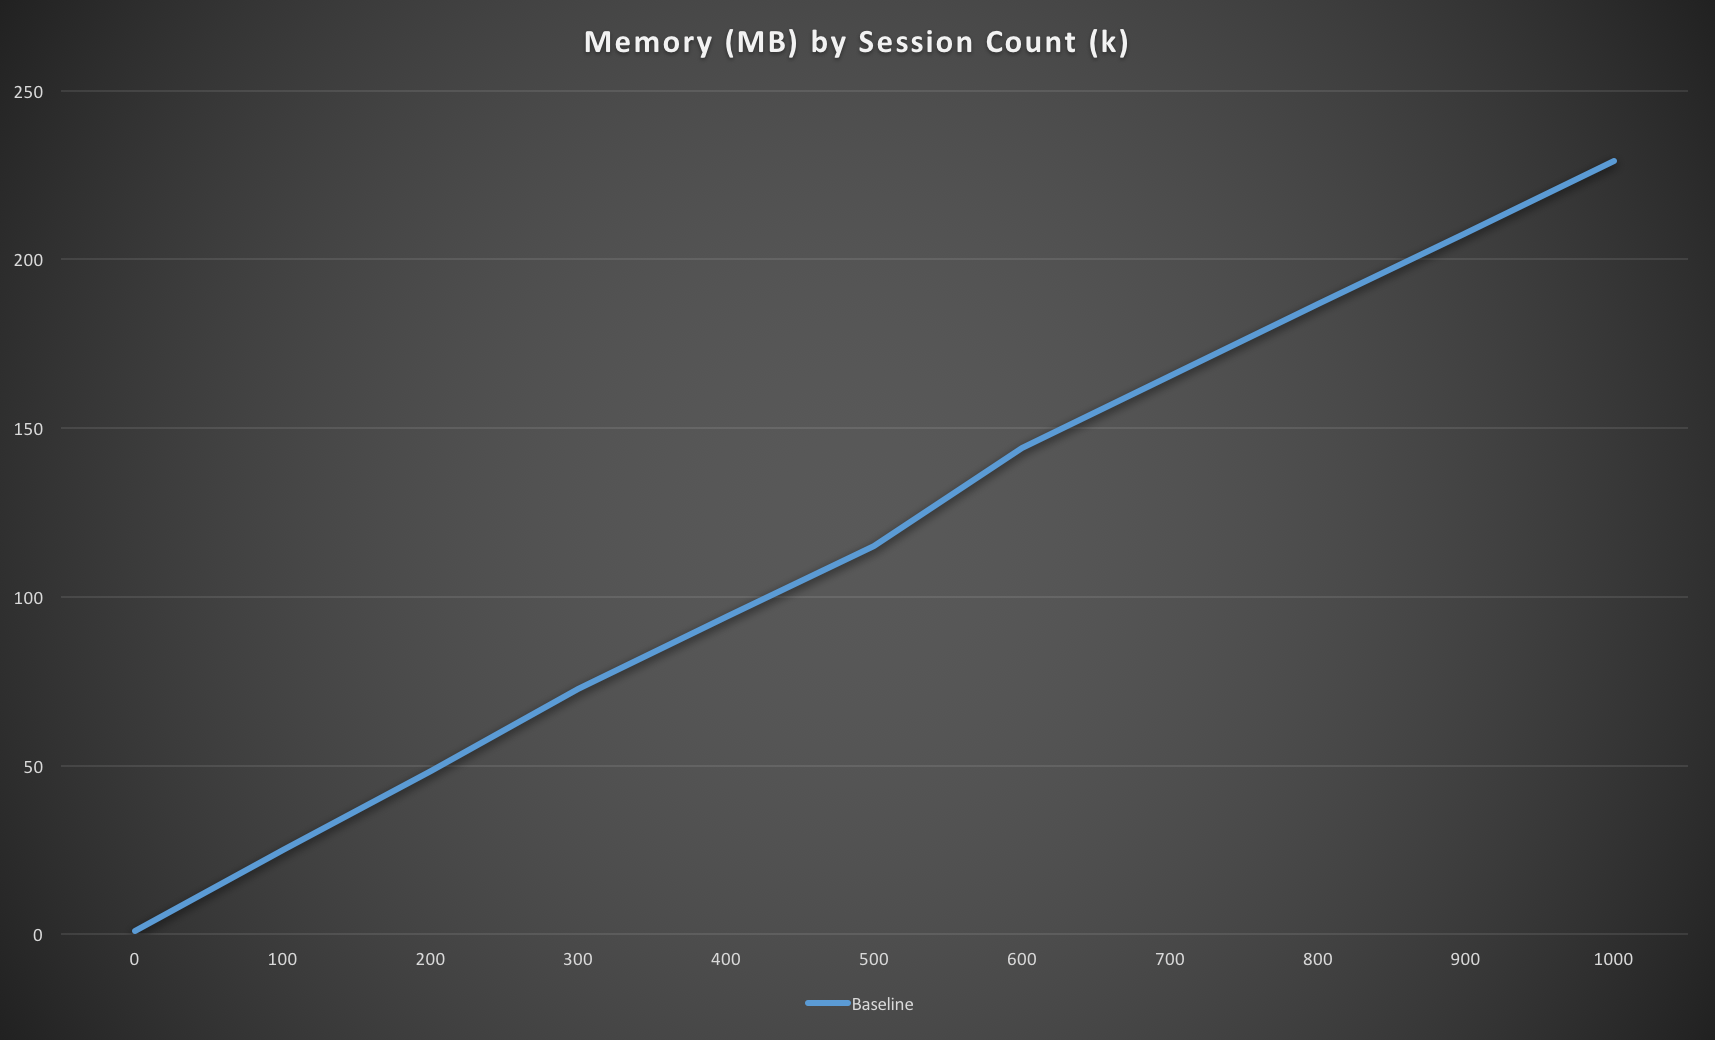 Baseline memory usage